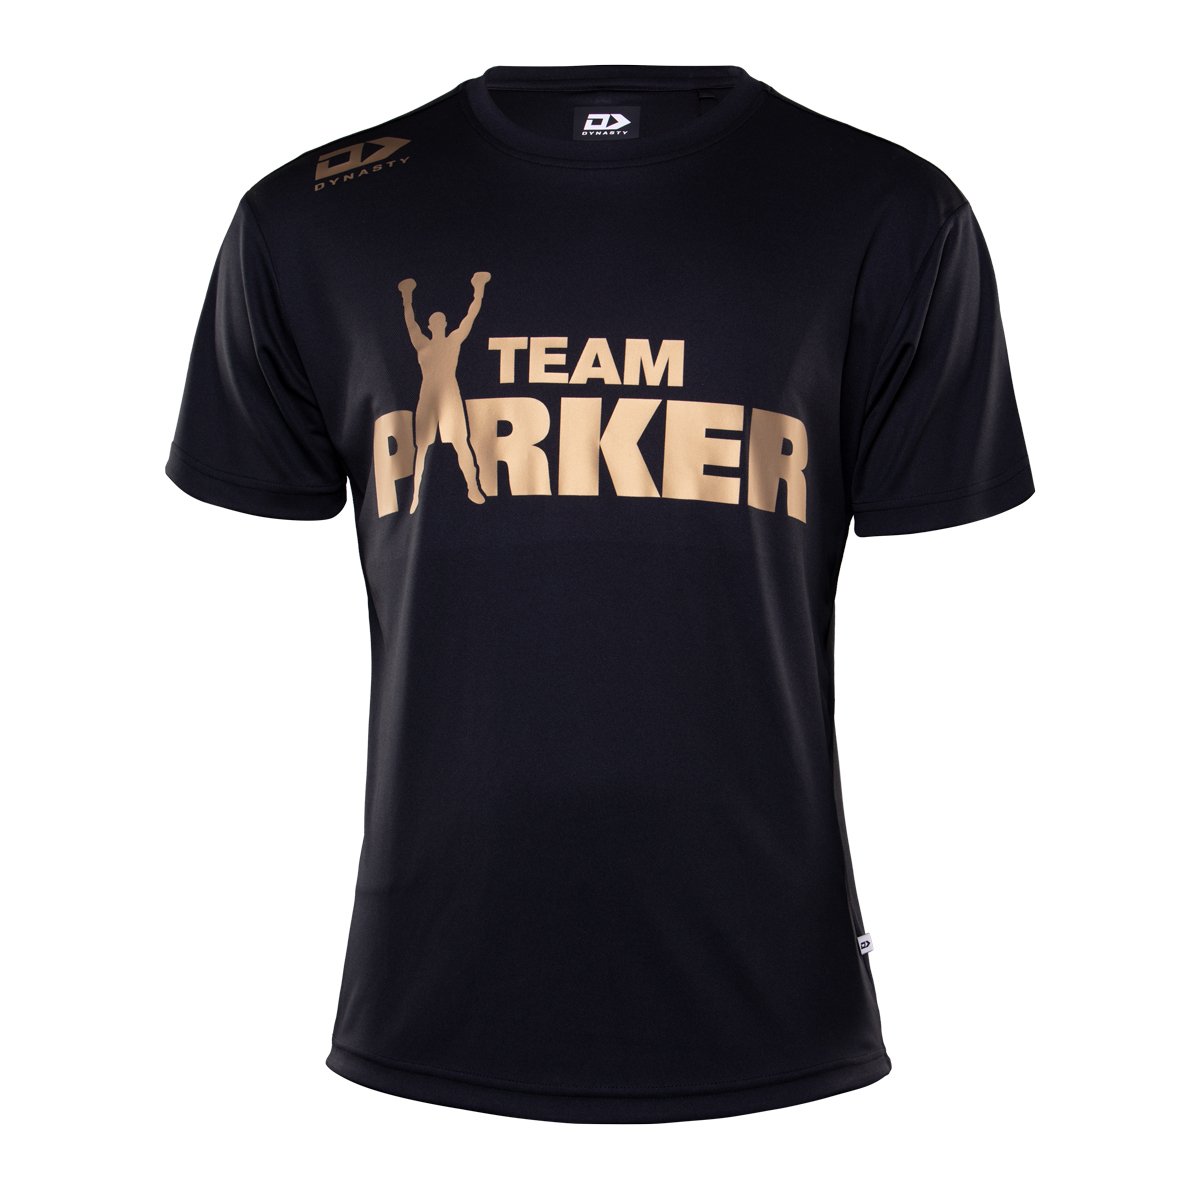 Joseph Parker Team Parker Tee